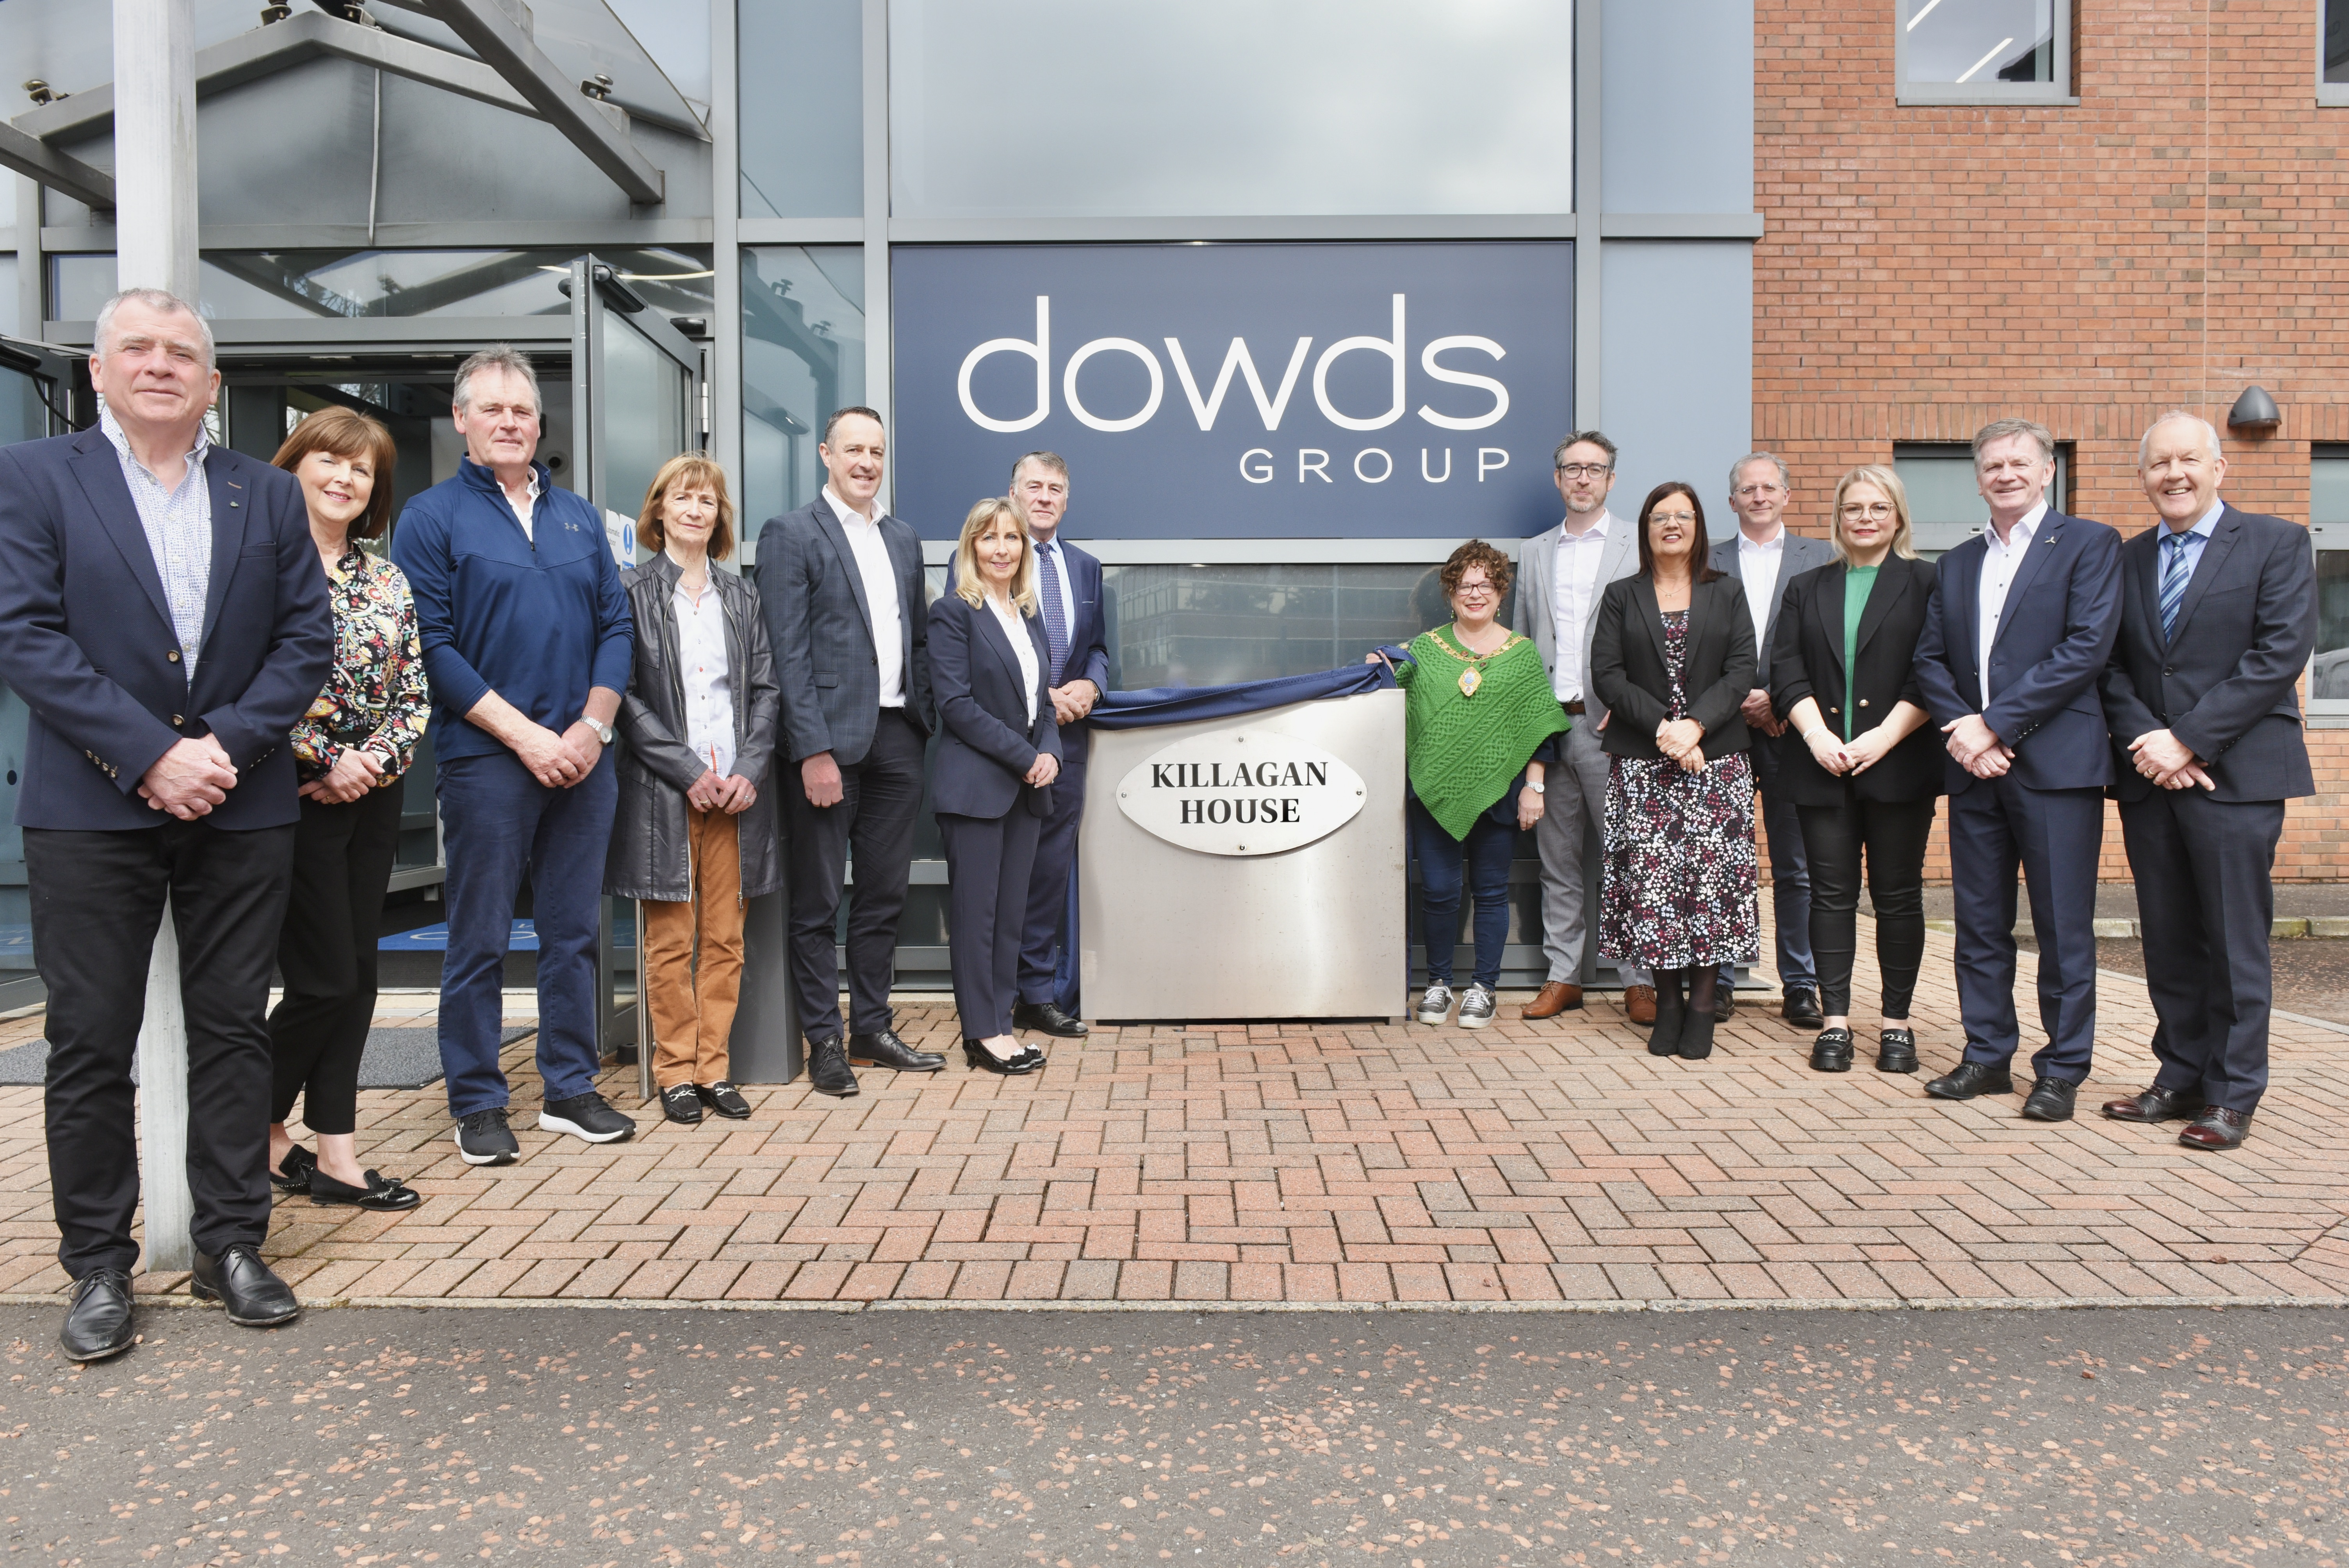 Dowds Group founders and former Directors alongside current management